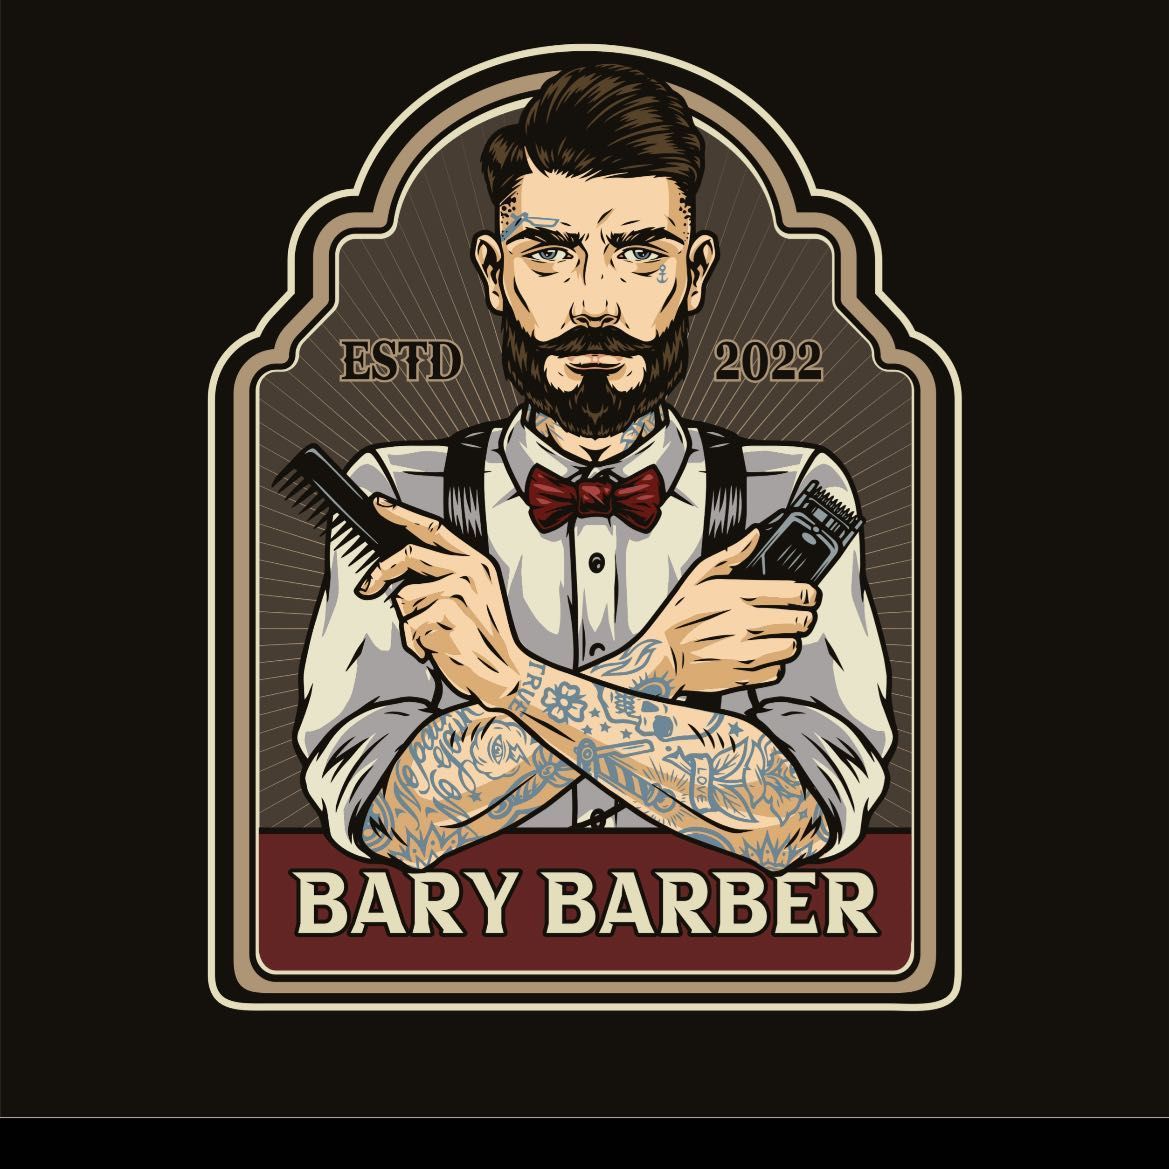 Bary Barber, Quo vadis, 10, 02-495, Warszawa, Ursus